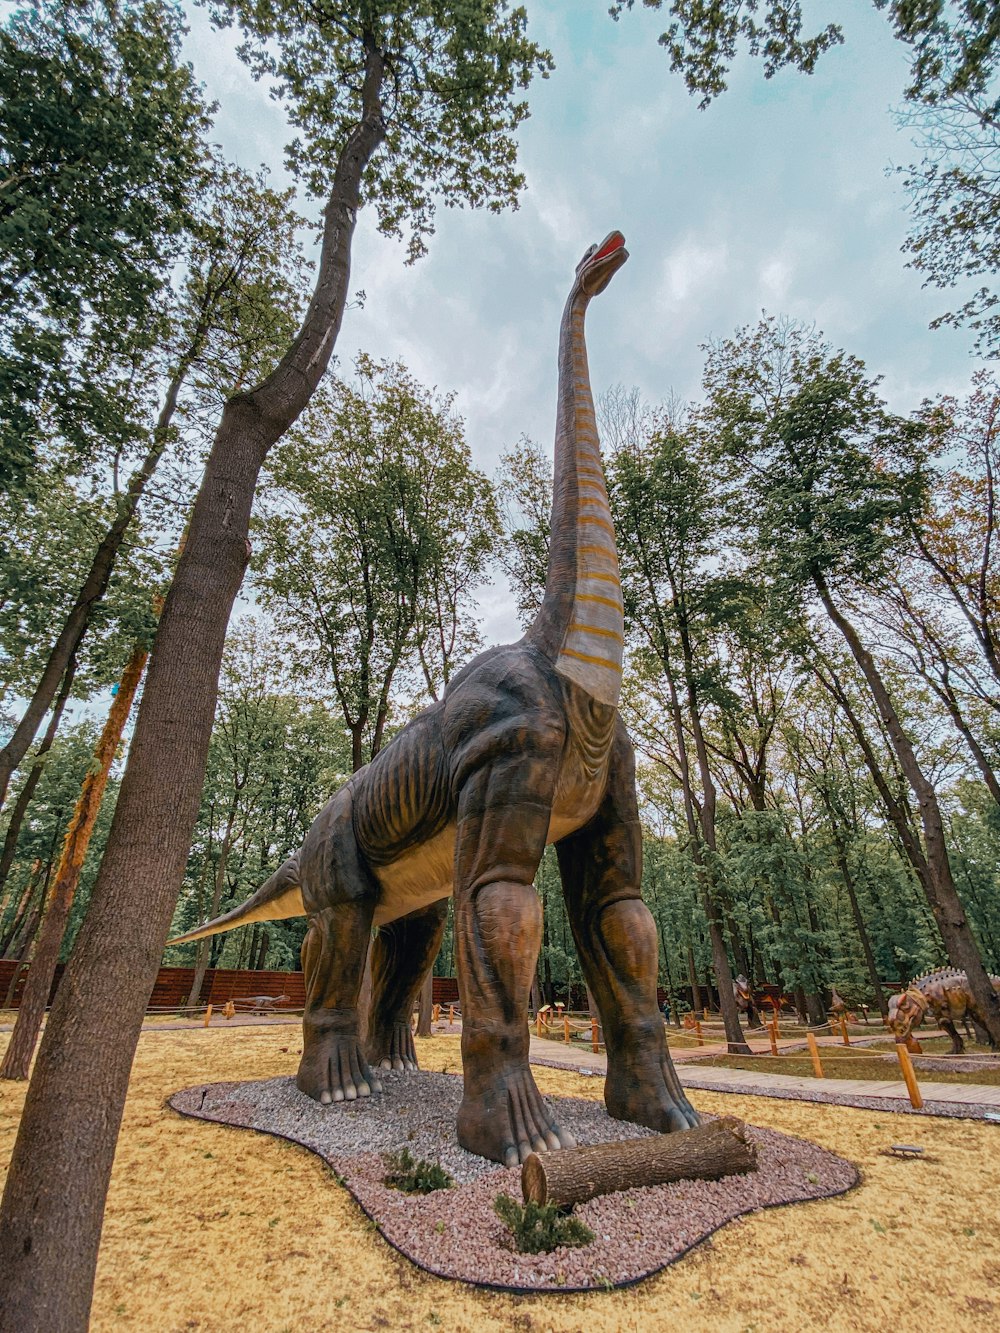 brown dinosaur statue near green trees during daytime